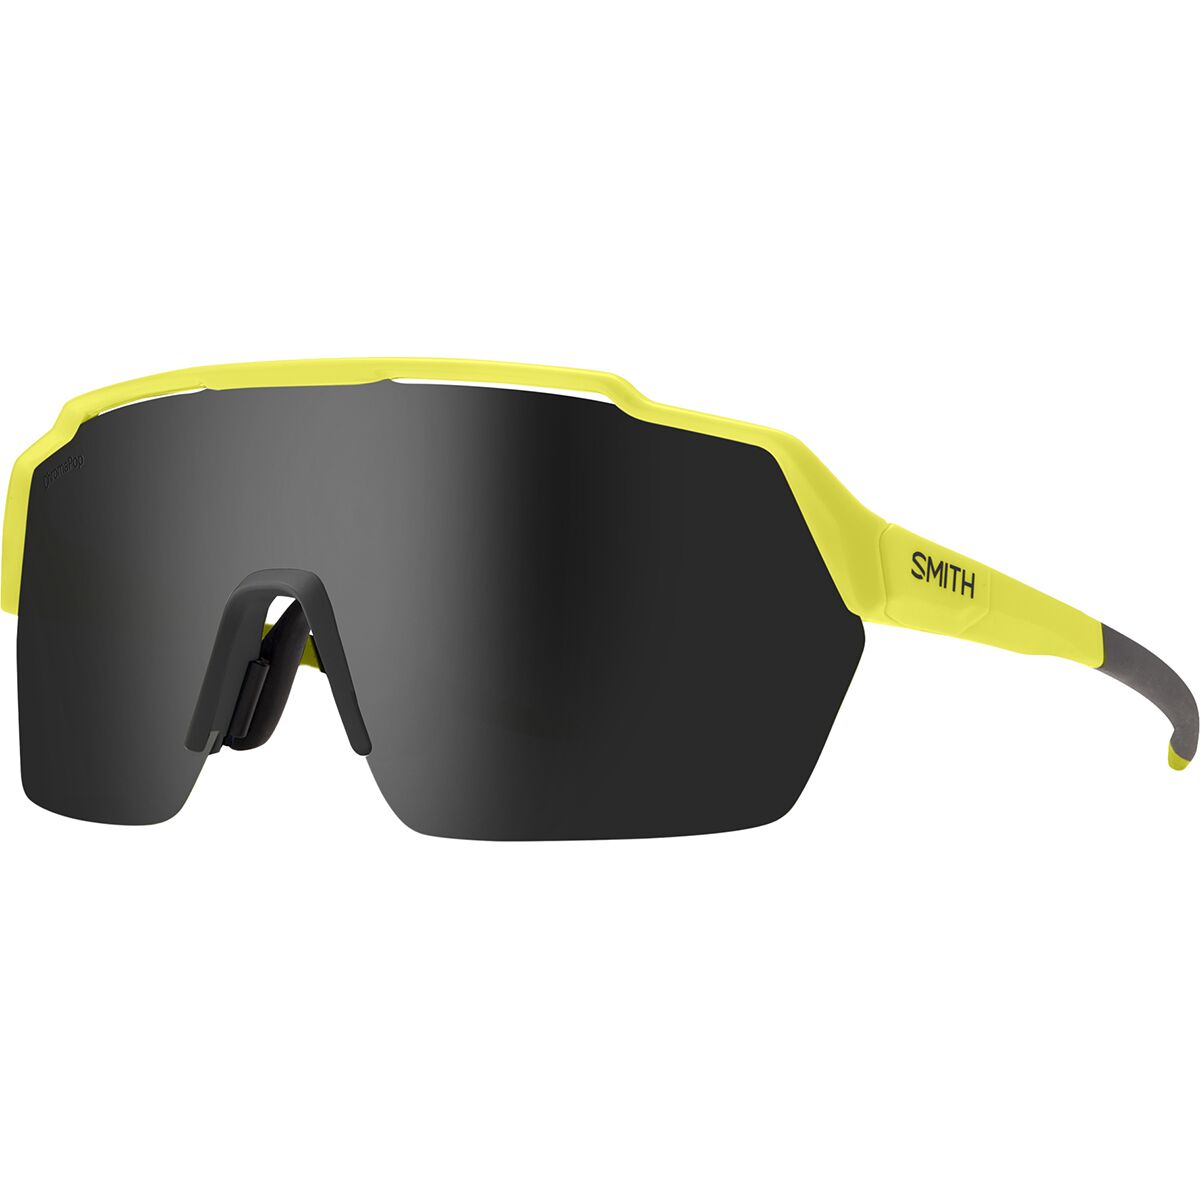 Smith Split MAG ChromaPop Sunglasses - Accessories